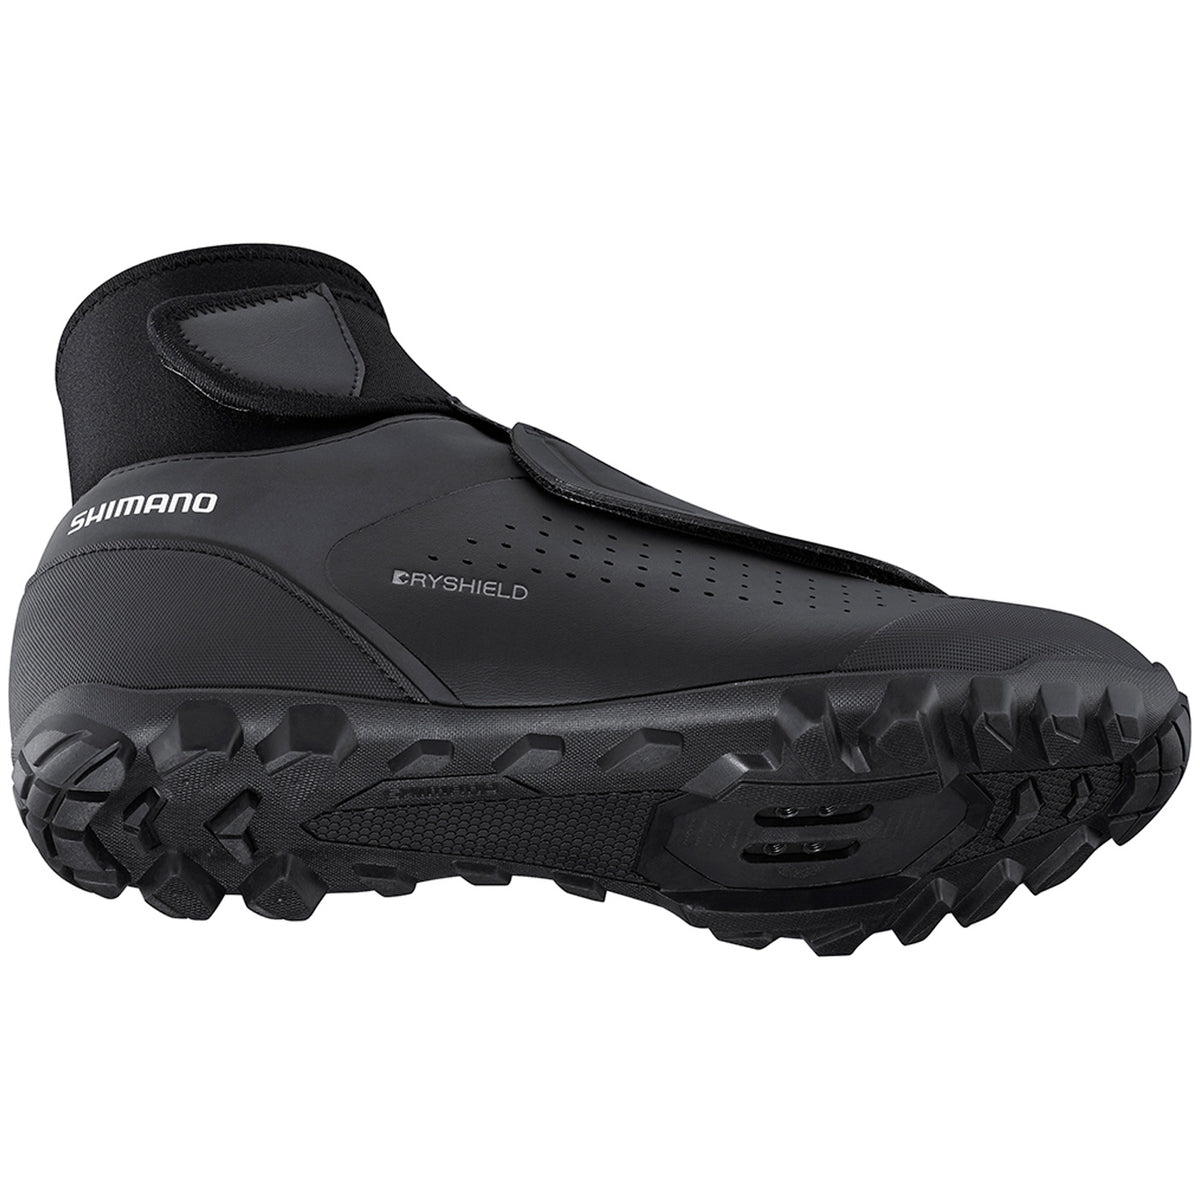 Zapatos Btt Shimano - Negro | All4cycling